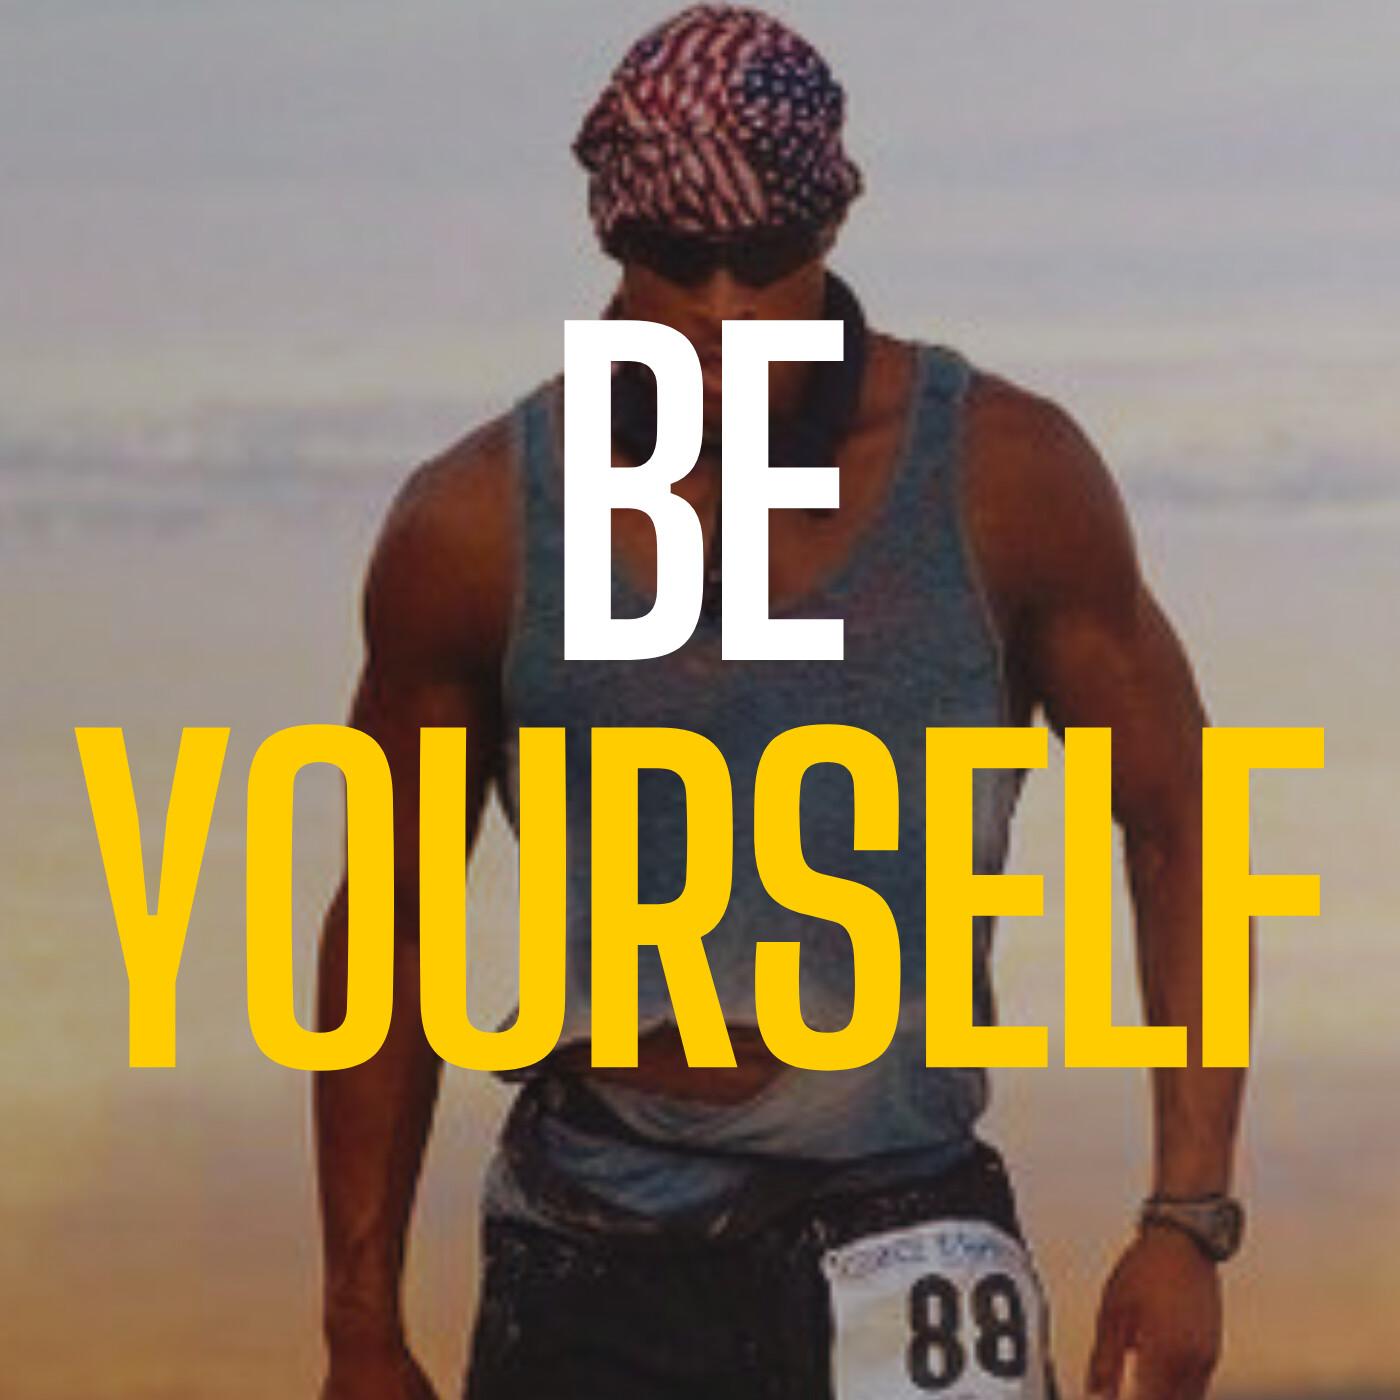 BE YOURSELF - David Goggins Motivational Speech